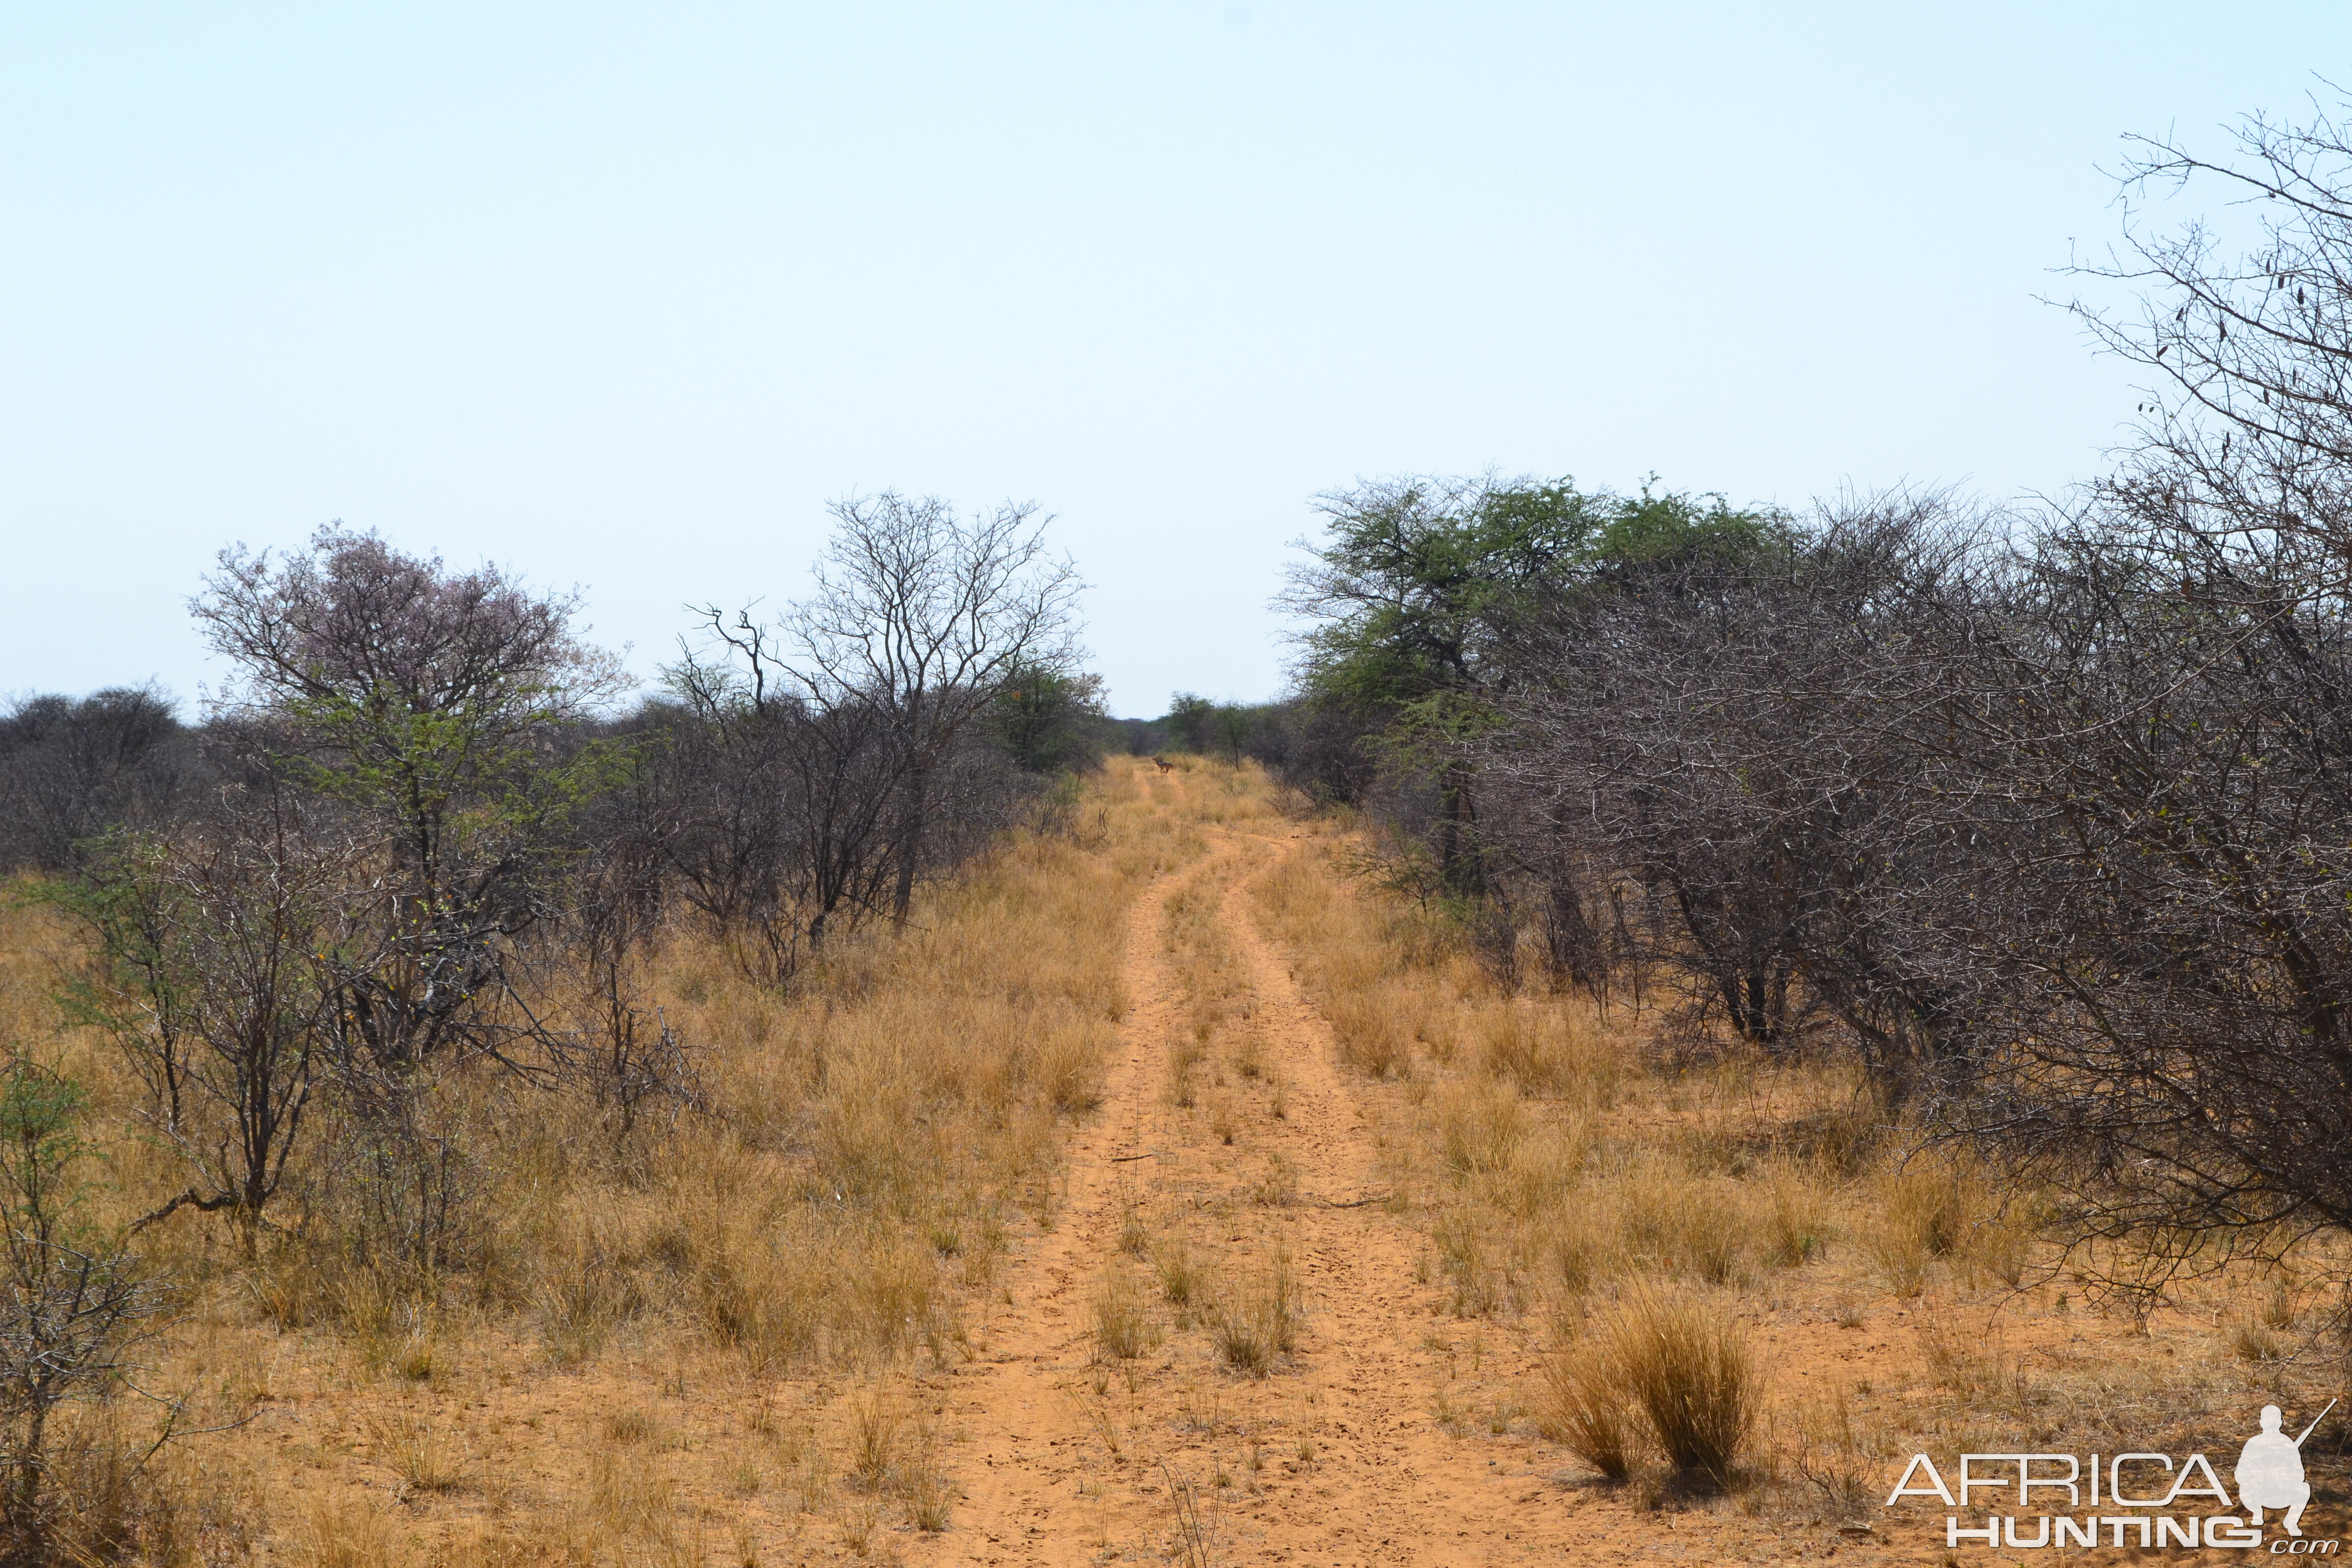 Springbok & Impala crossing the tracks